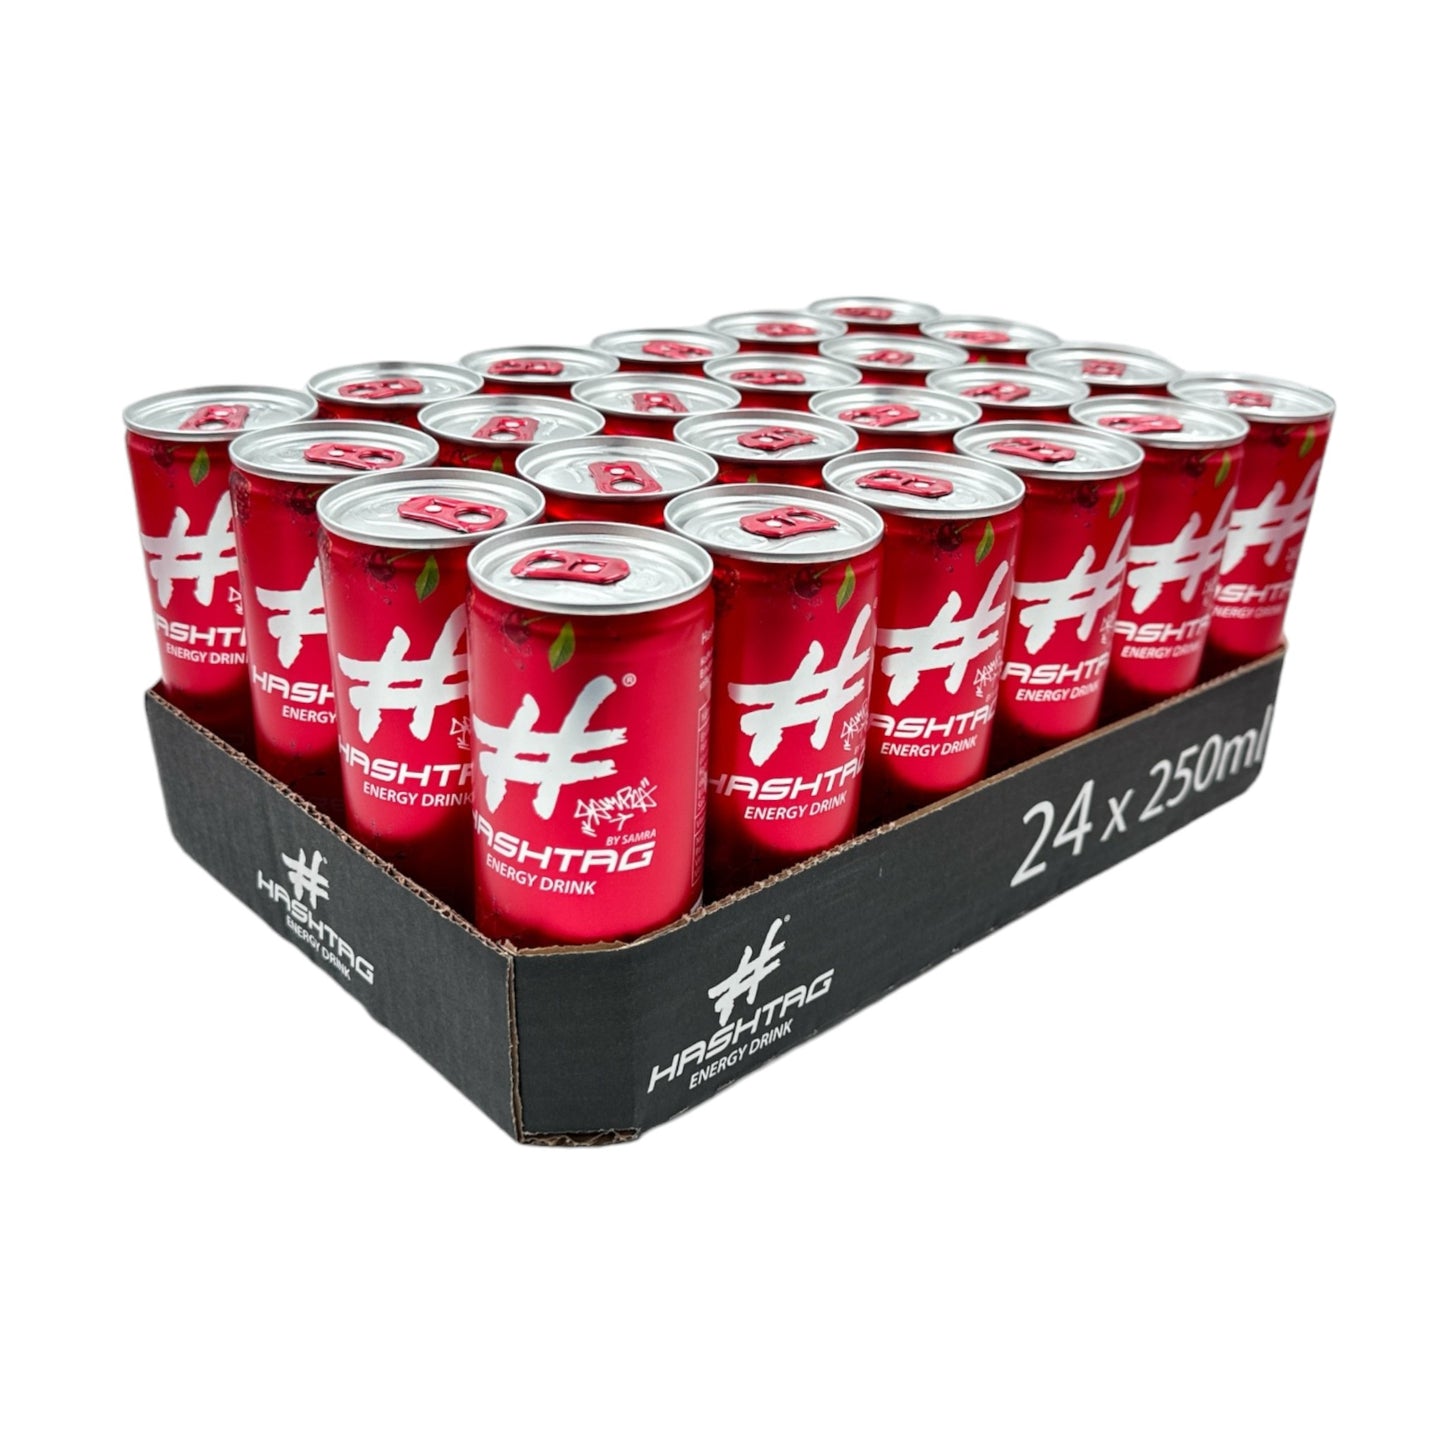 Hashtag Red Energy Drink Kirsche Granatapfel 250ml